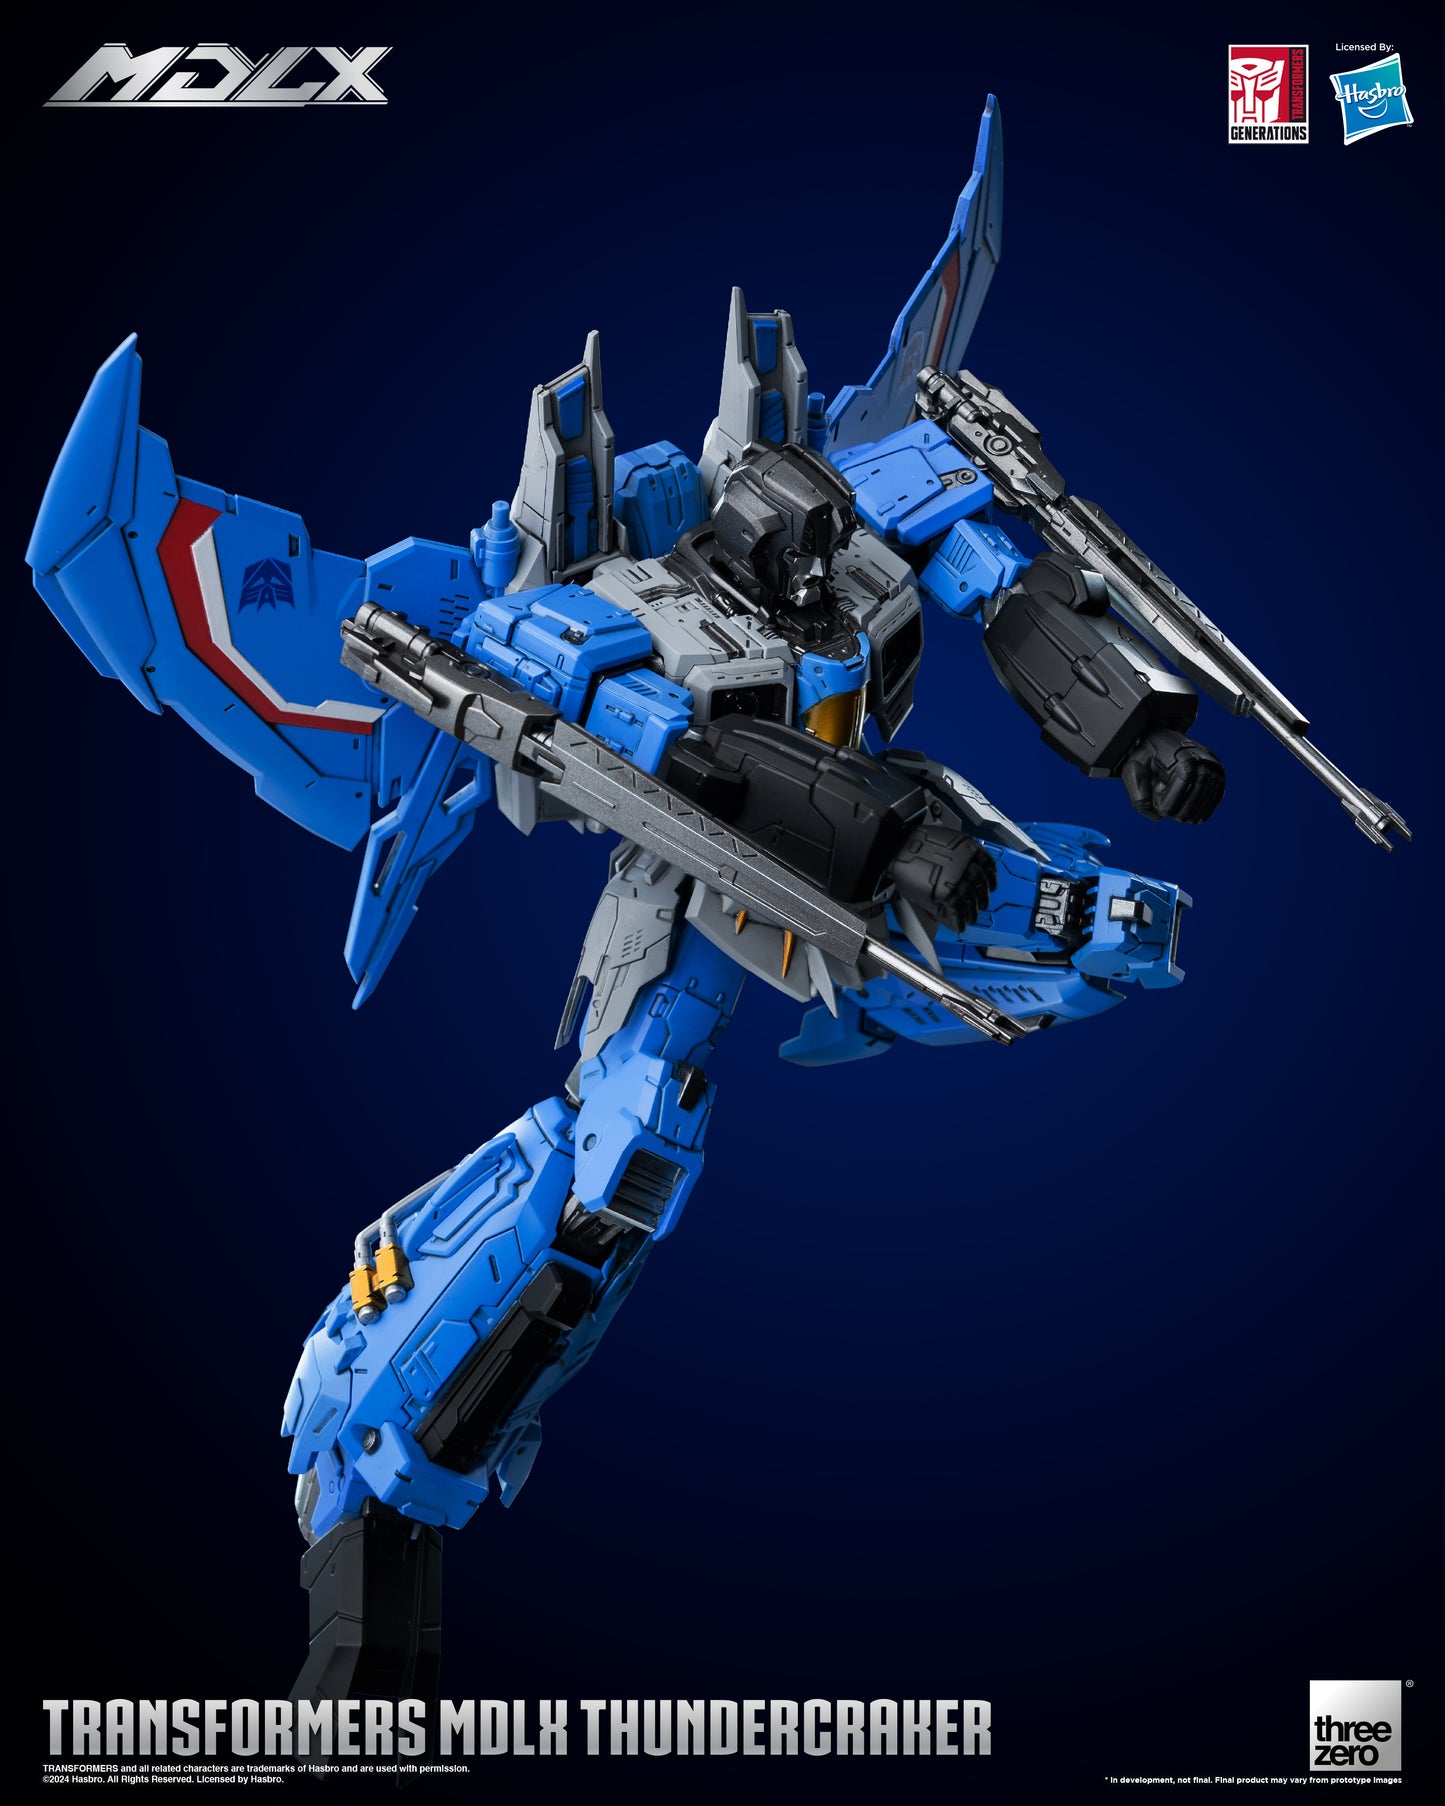 Transformers MDLX Articulated Figure Series Thundercracker double gun shooting pose